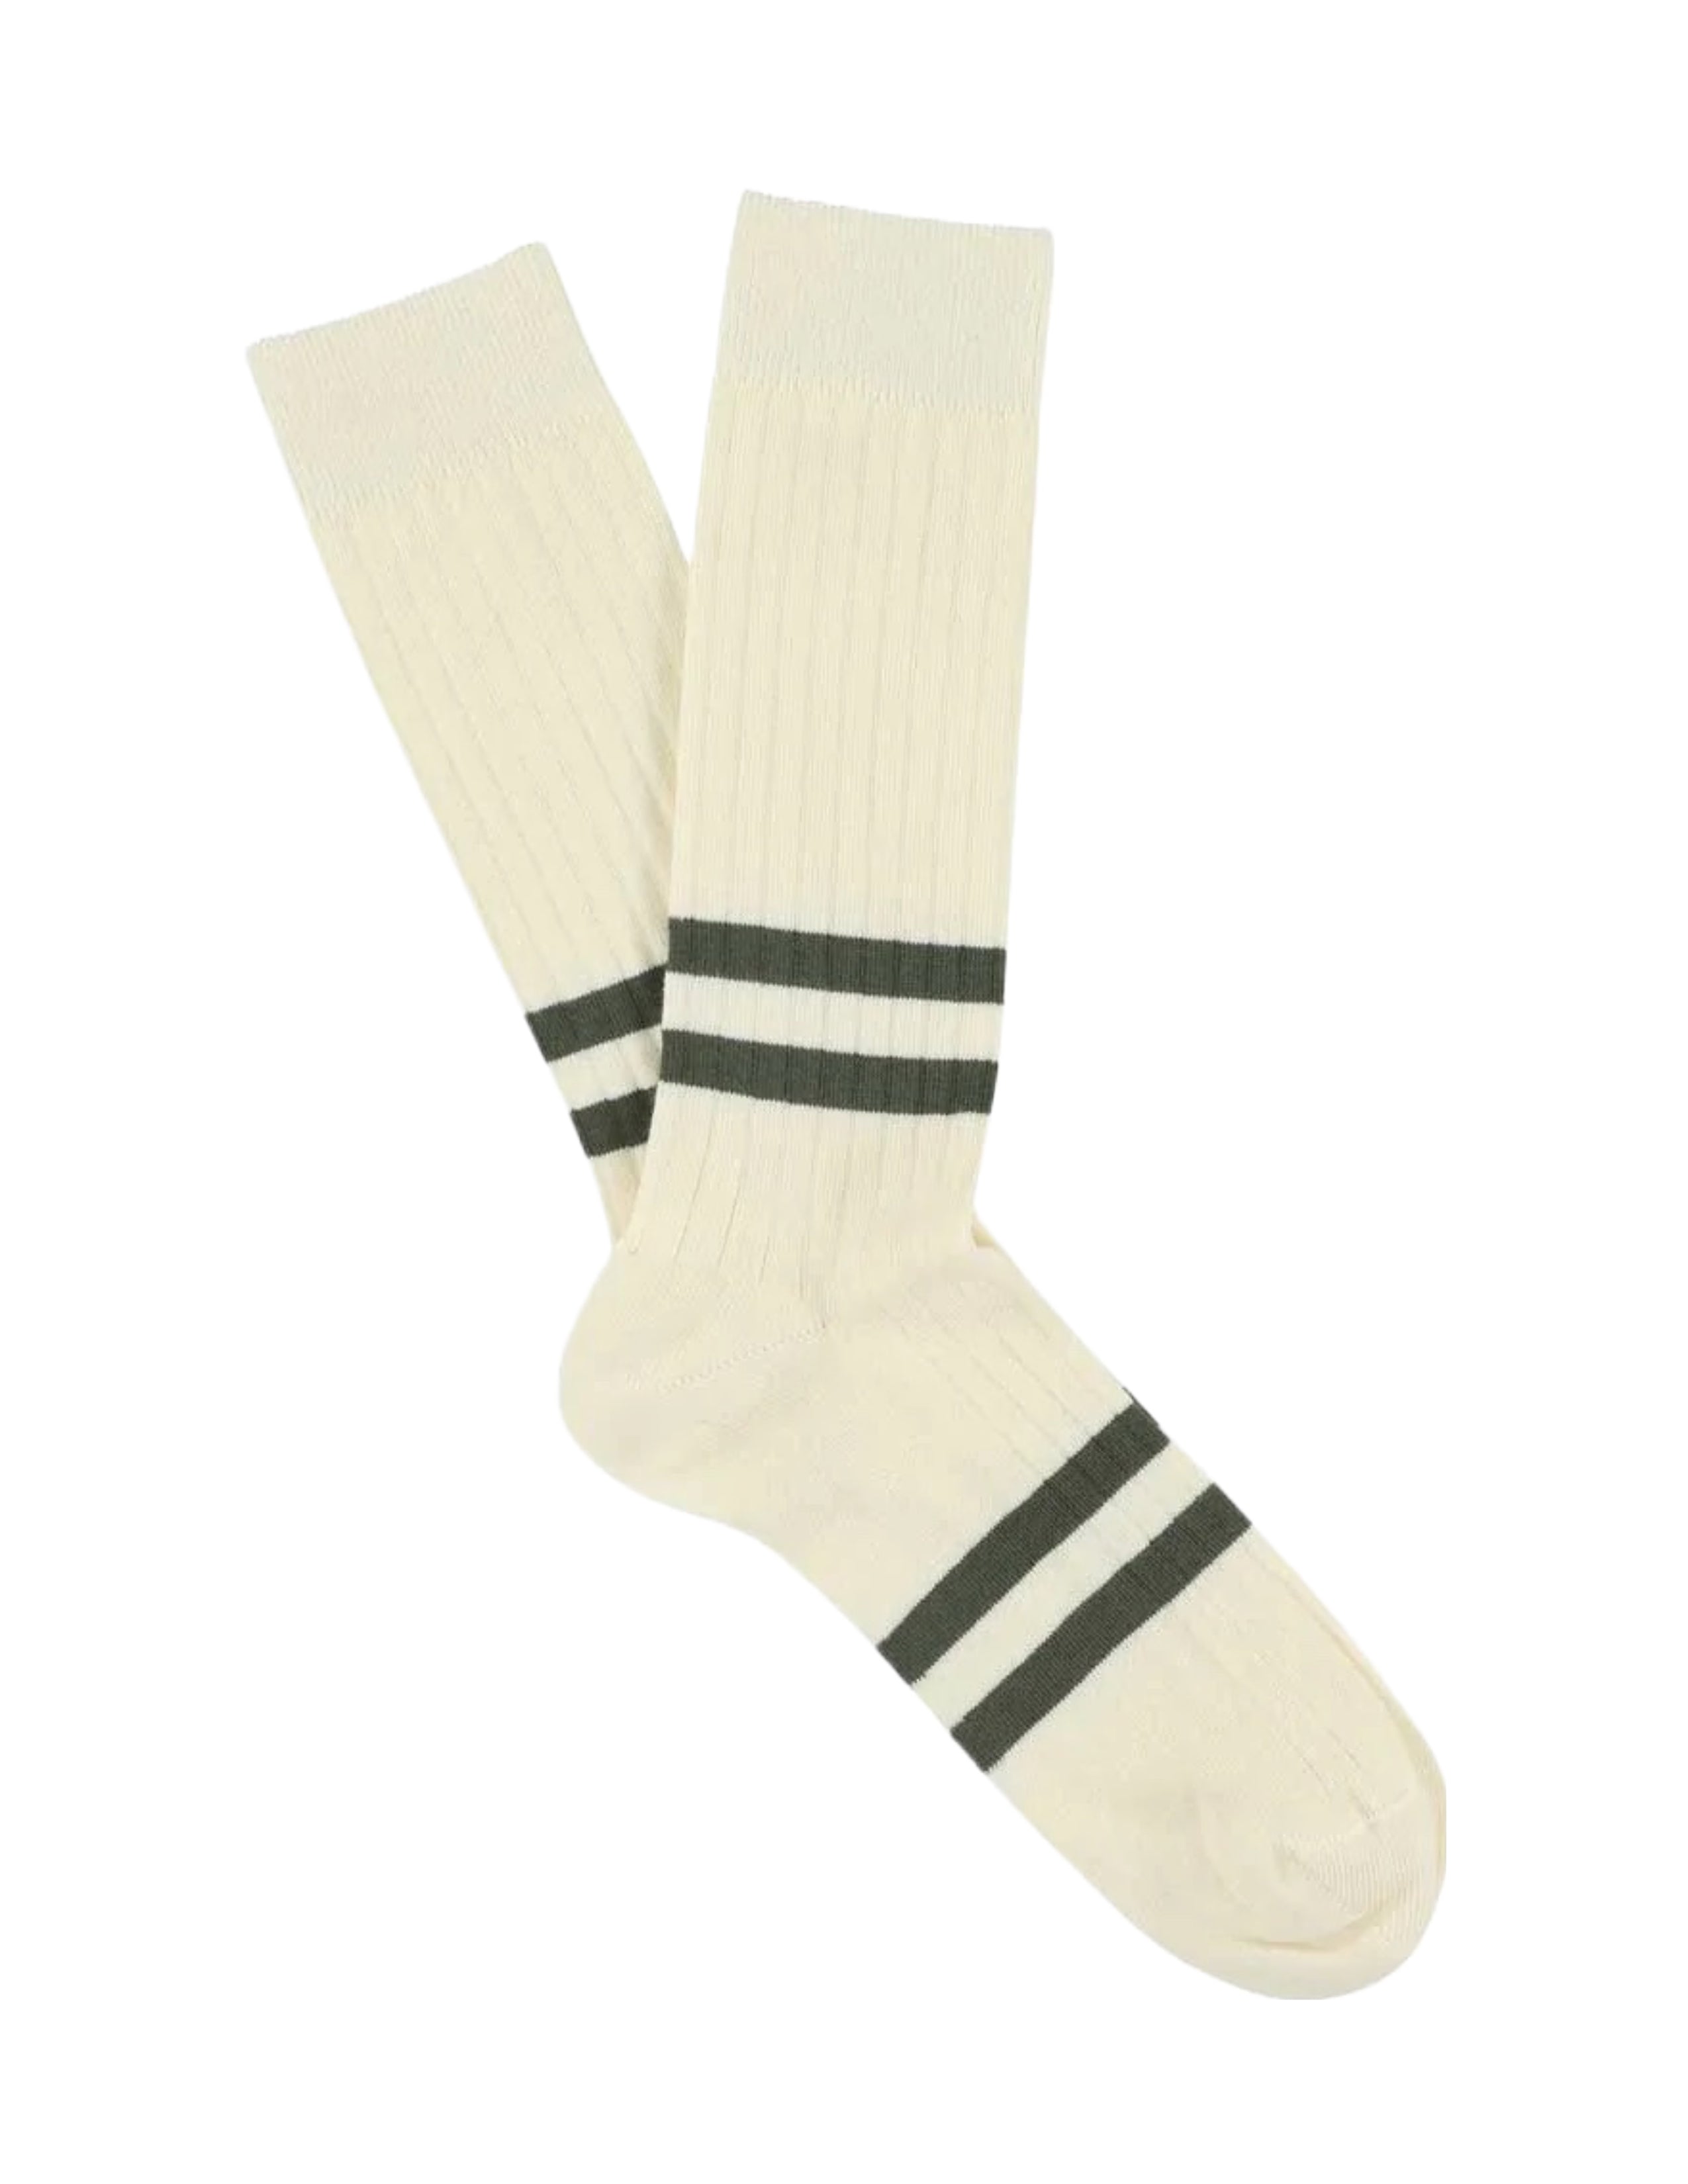 Stripe Socks - Ecru/Khaki